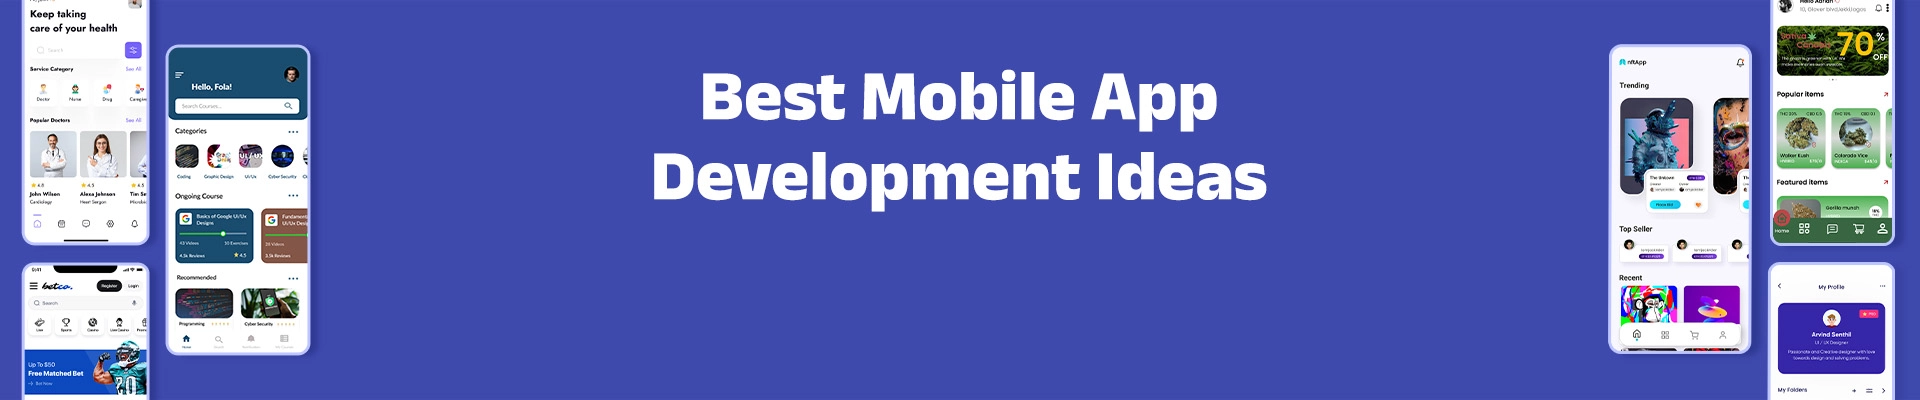 Best Mobile App Development Ideas